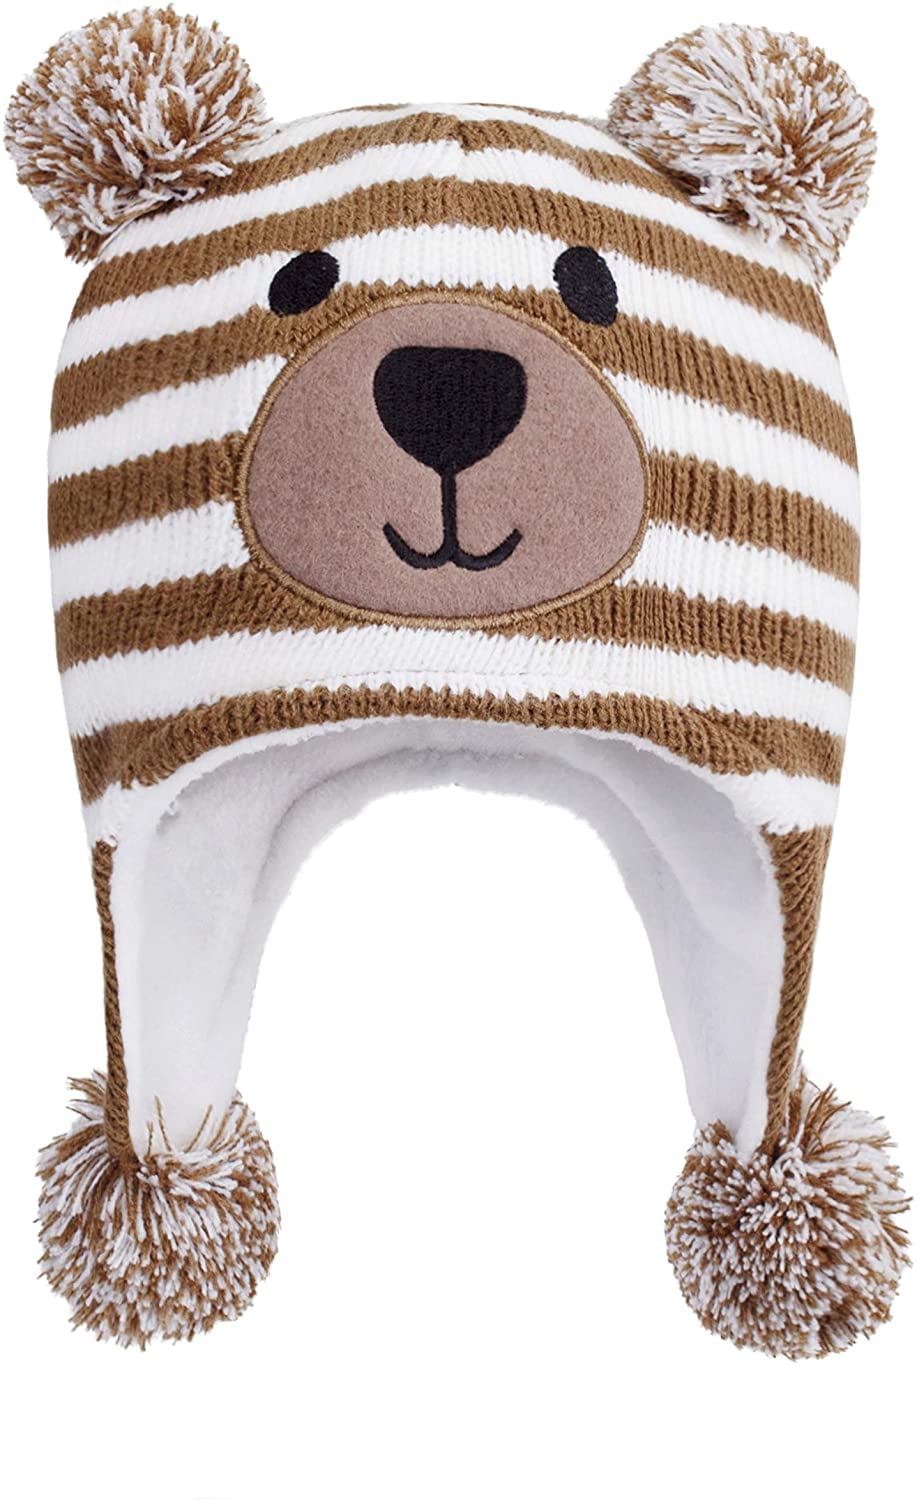 LANGZHEN Toddler Kids Infant Winter Hat,Earflap Knit Warm Cap Fleece Lined Beanie for Baby Boys Girls 